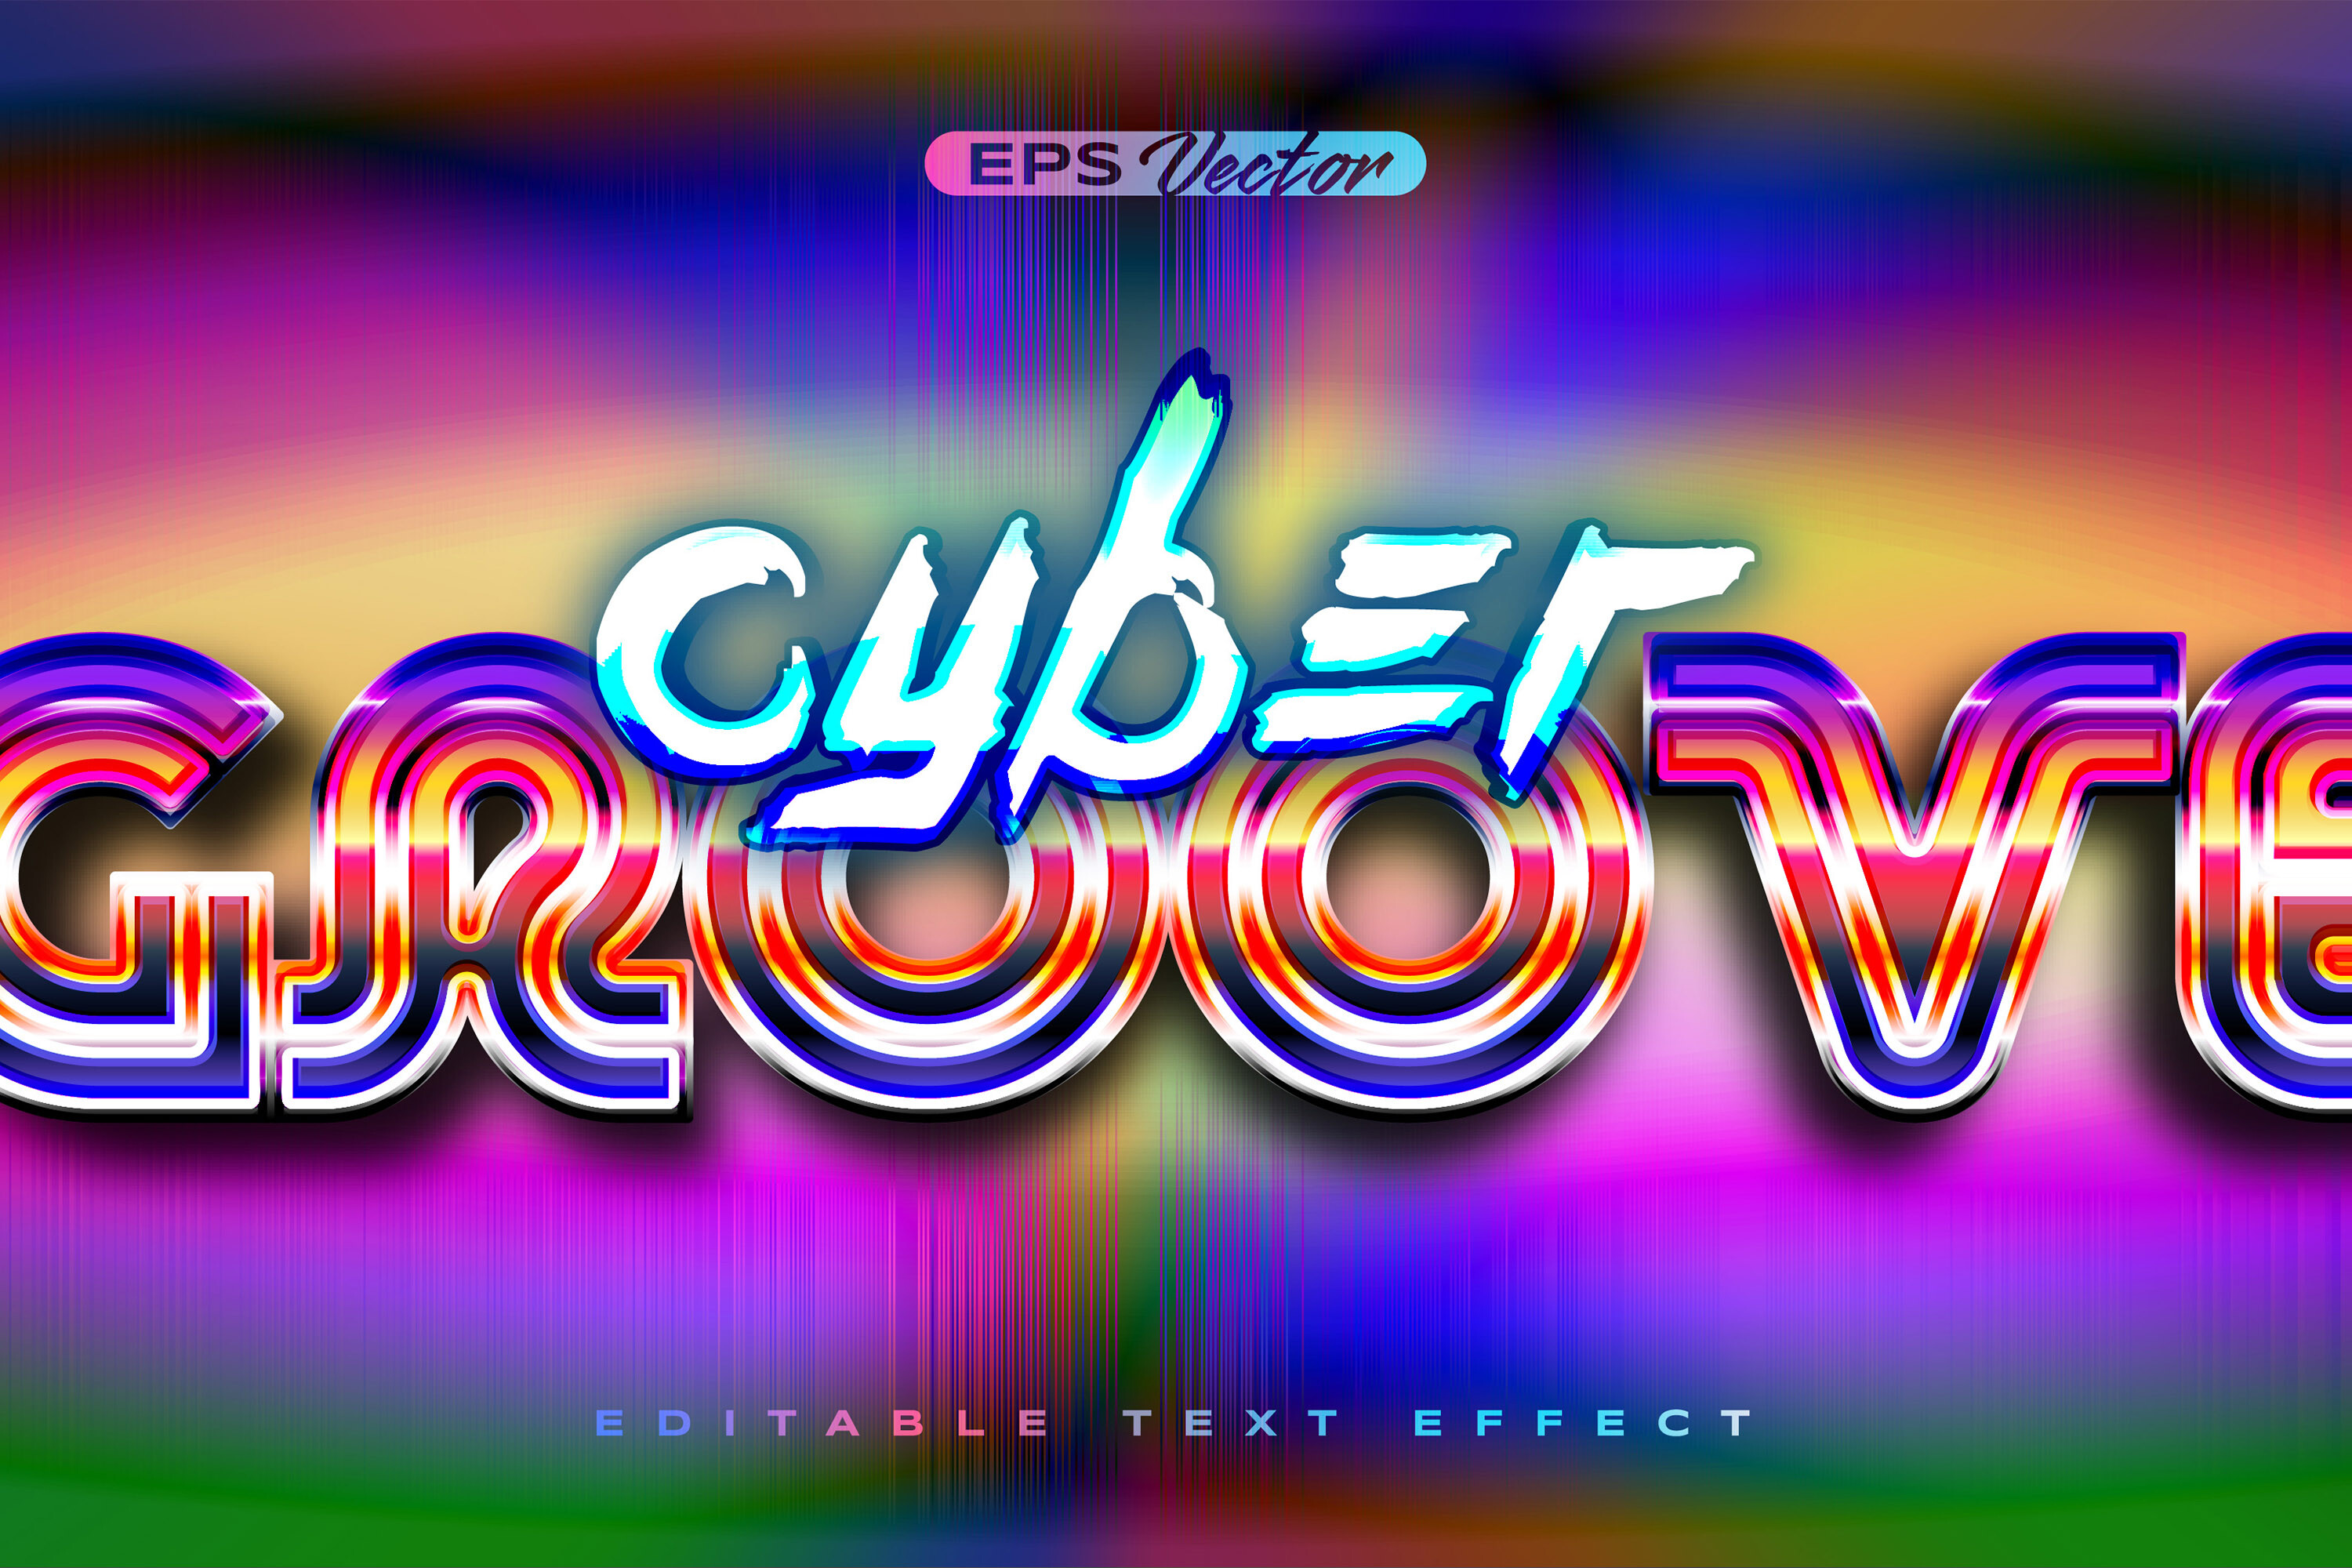 Retro shiny Y2K editable text effect cyber tech